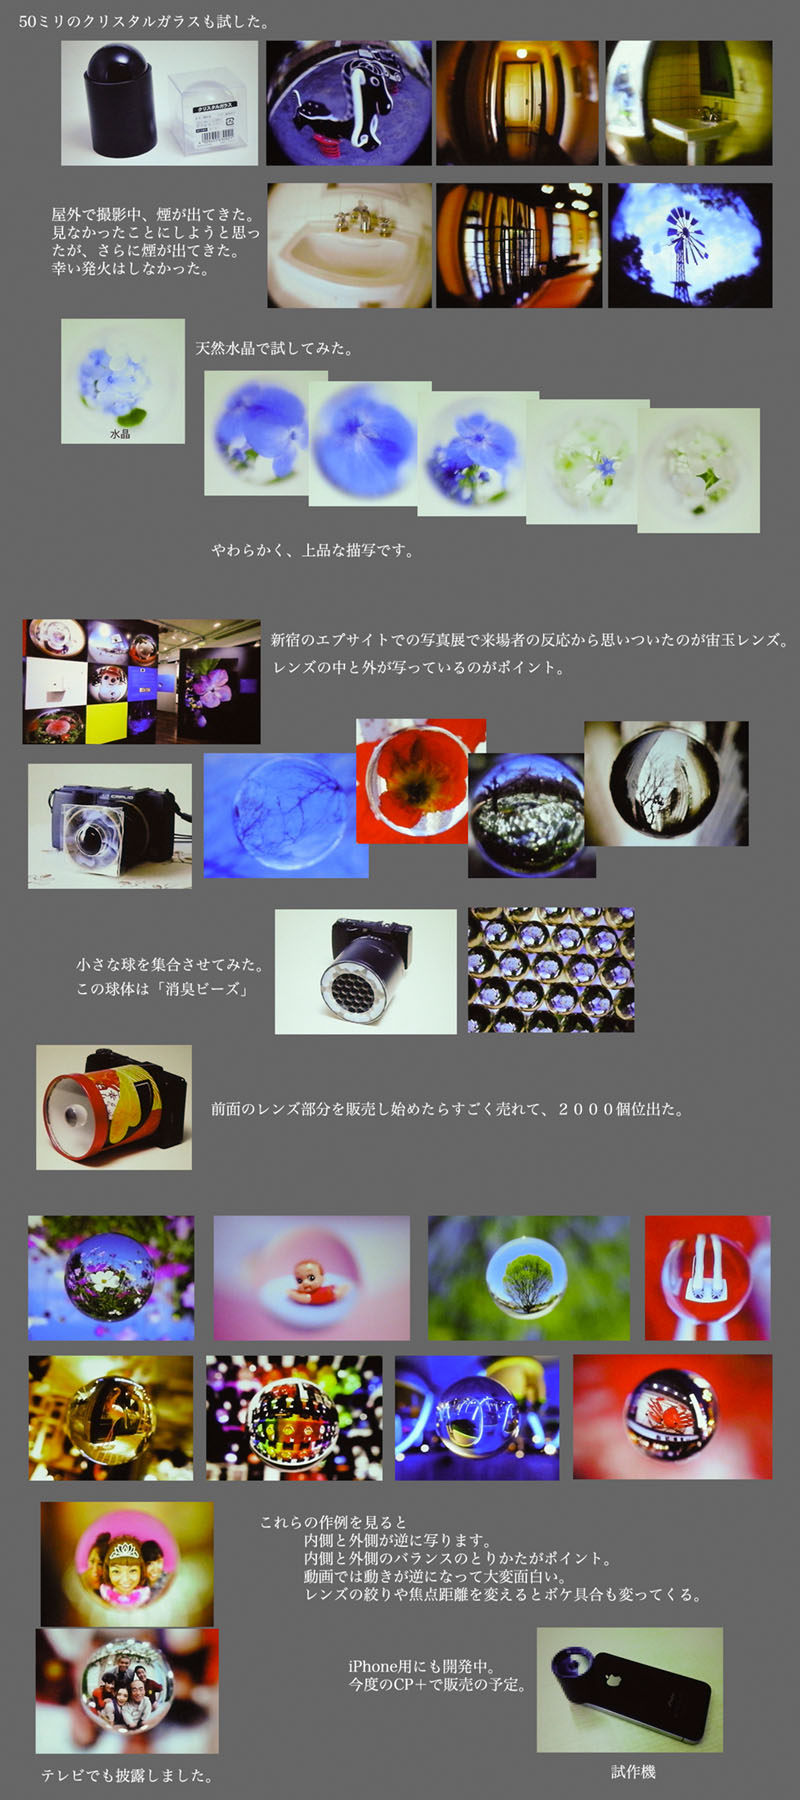 http://denjuku.gr.jp/seminar/_images/zen003.JPG